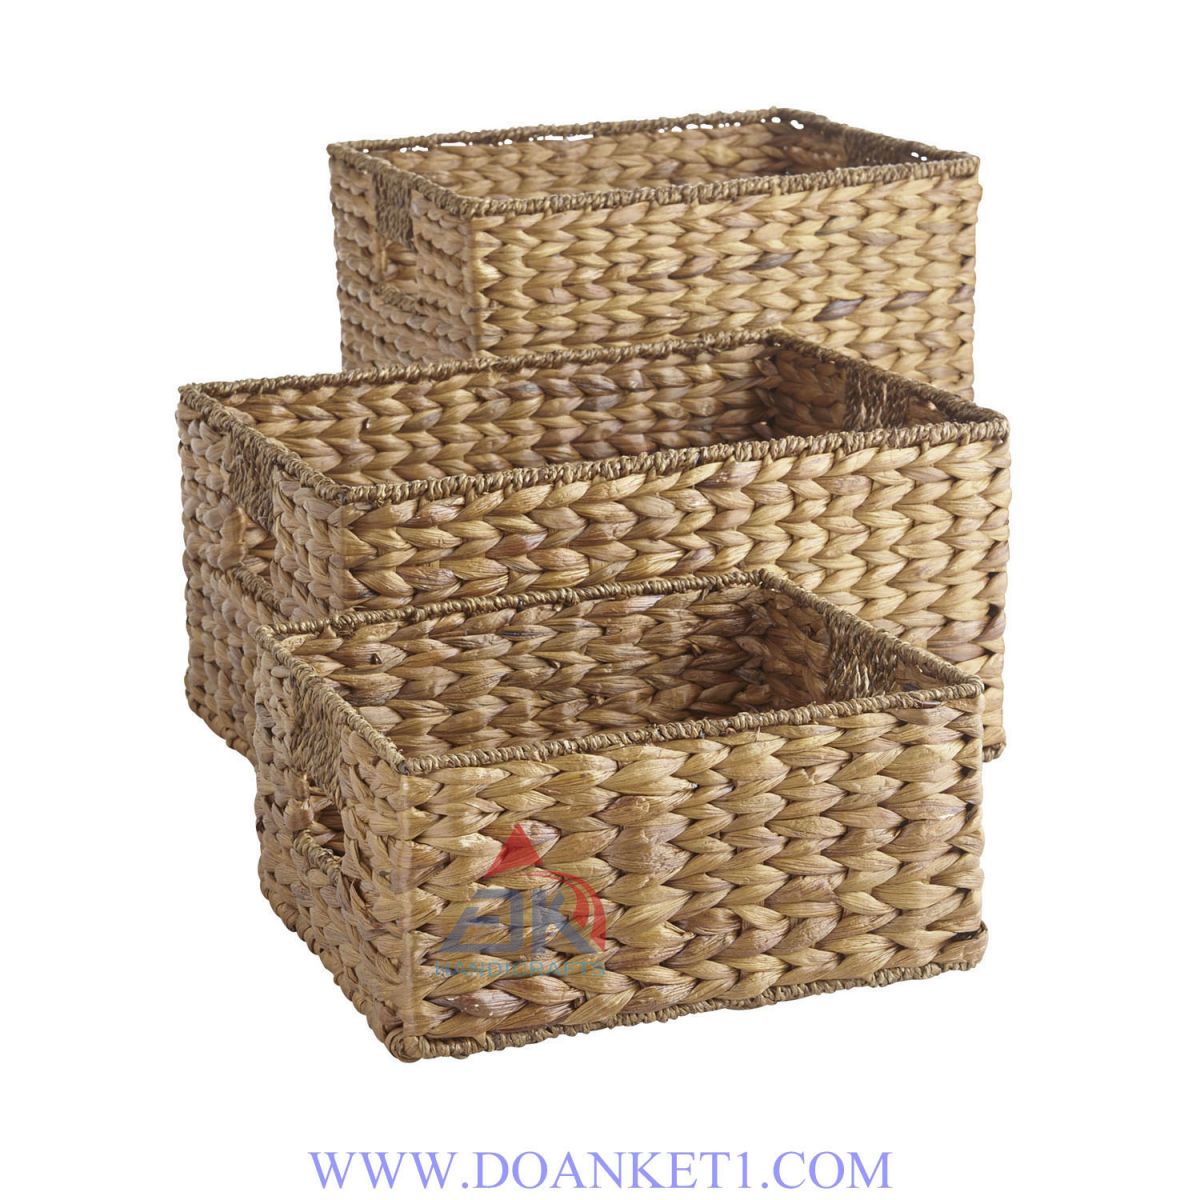 Water Hyacinth Basket S/3 # DK308